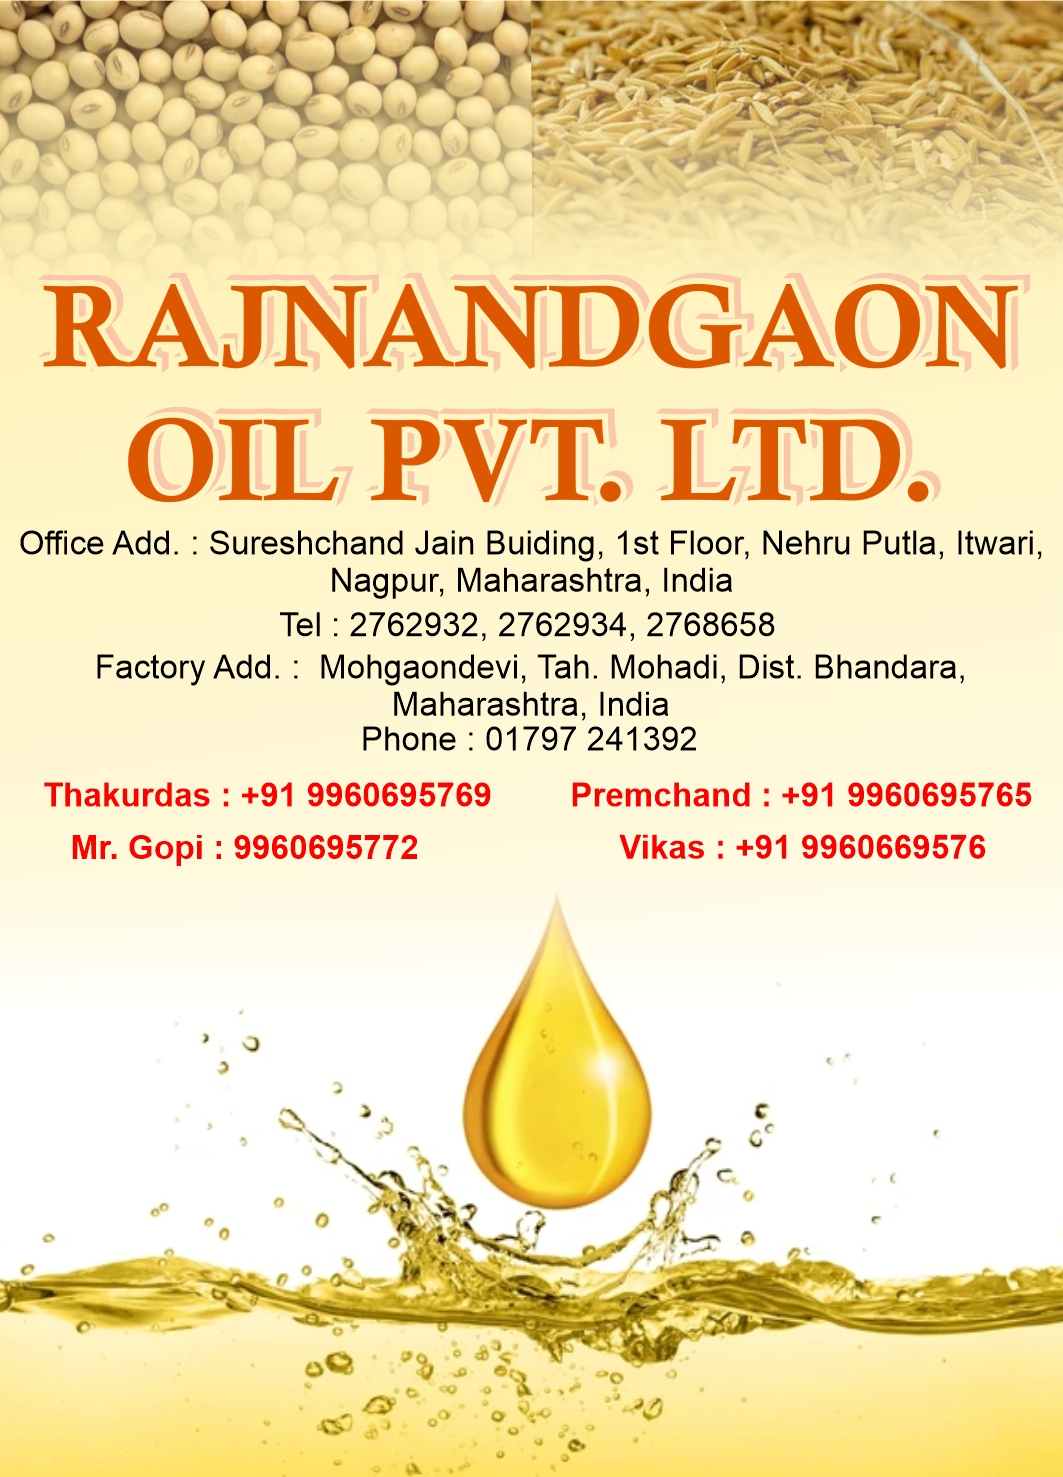 Rajnandgaon Oil Pvt. Ltd.